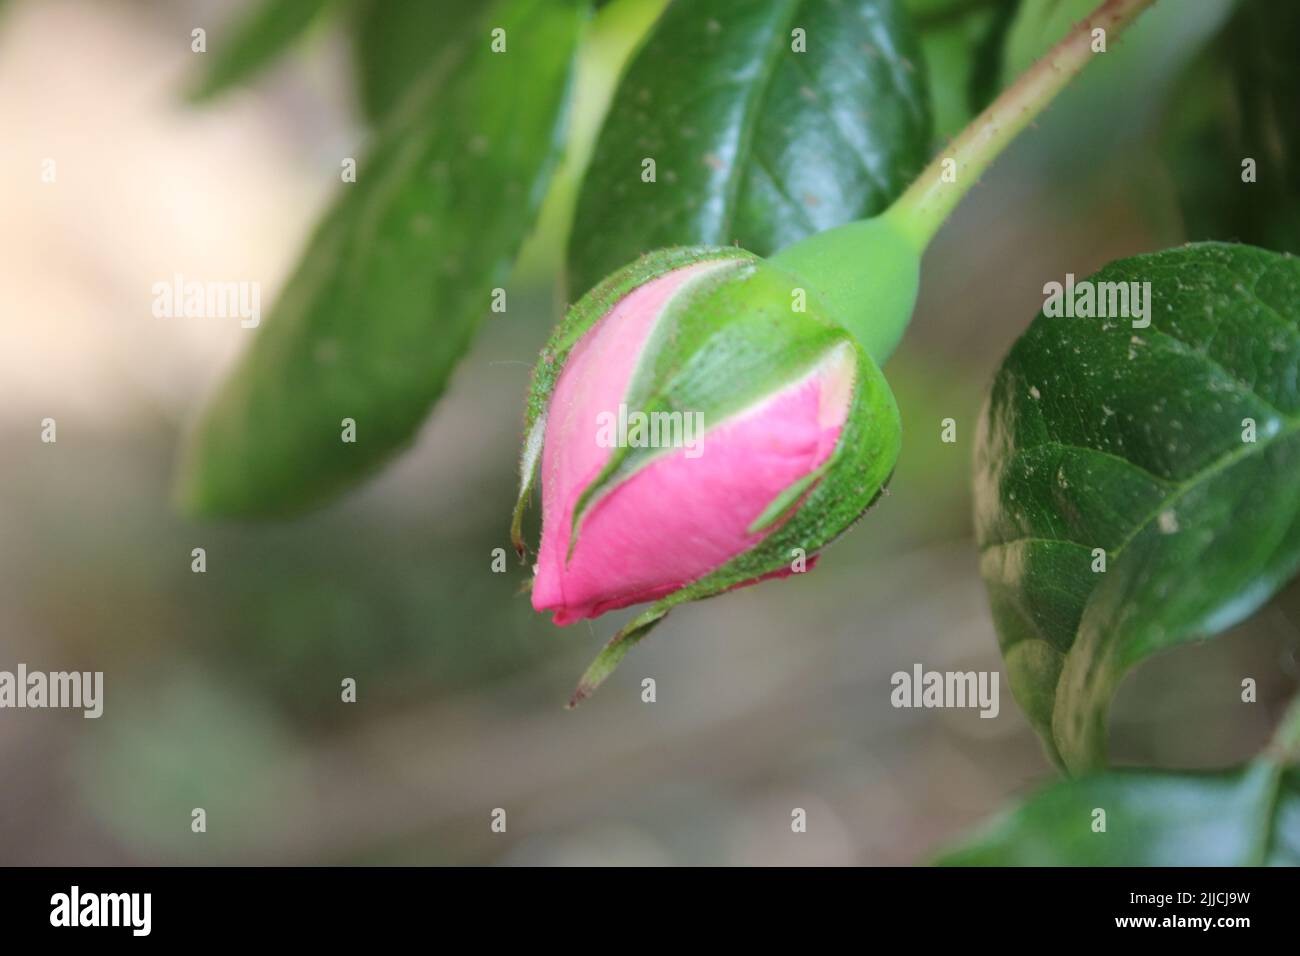 Rosebuds in close-up. Pink flower photography. Green background image. Daylight. Lush foliage. Bushy rose tree. Amazing natural illustration. Fresh. Stock Photo